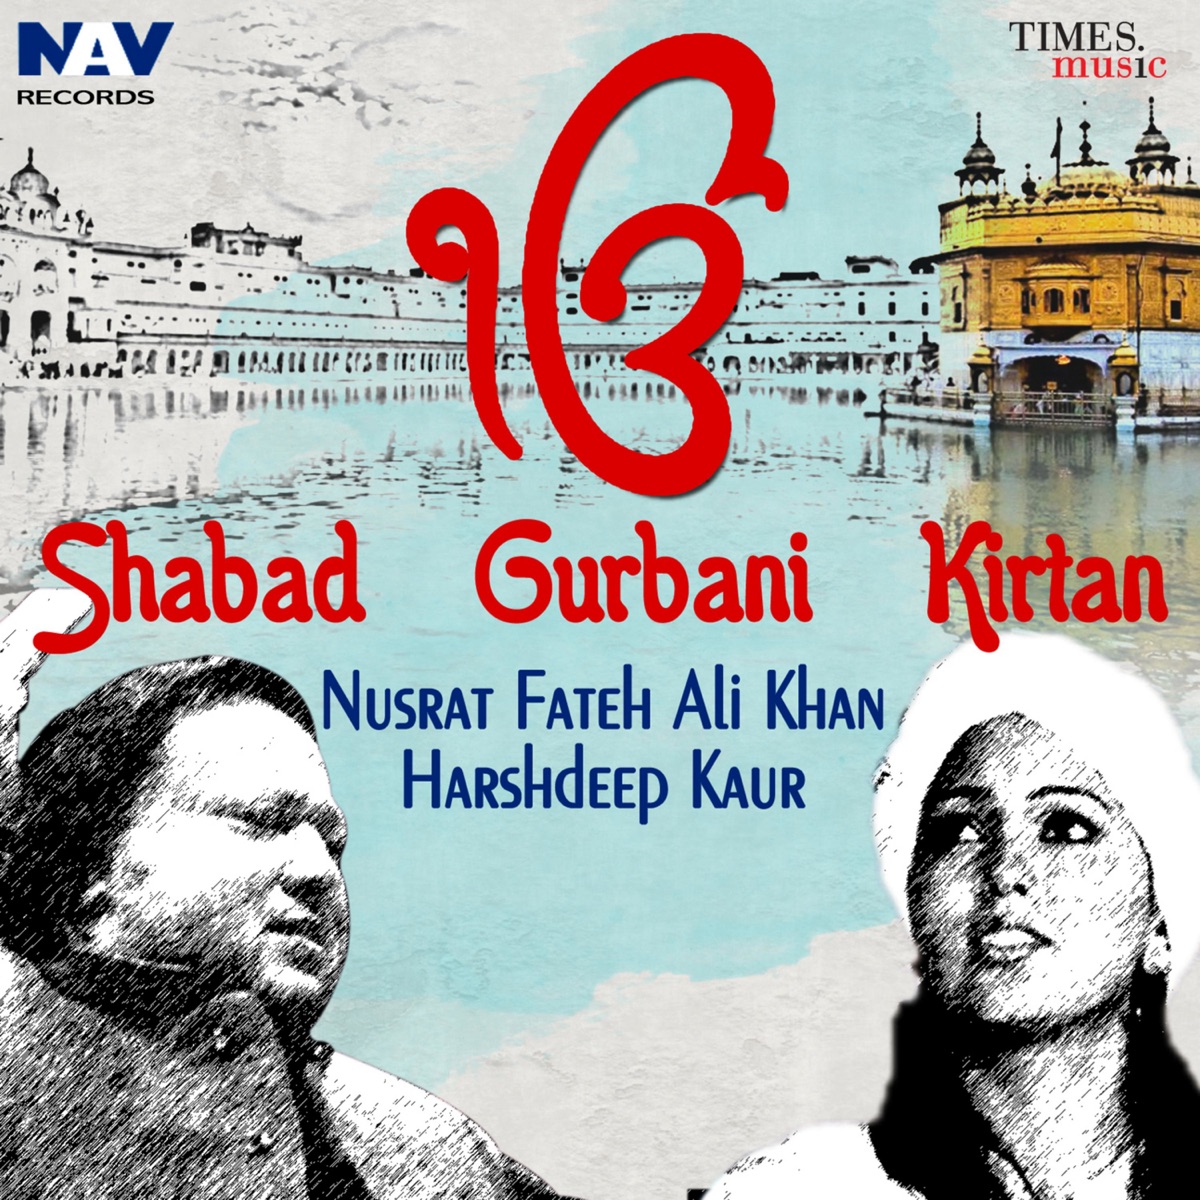 Shabad Gurbani Kirtan by Various Artists on Apple Music